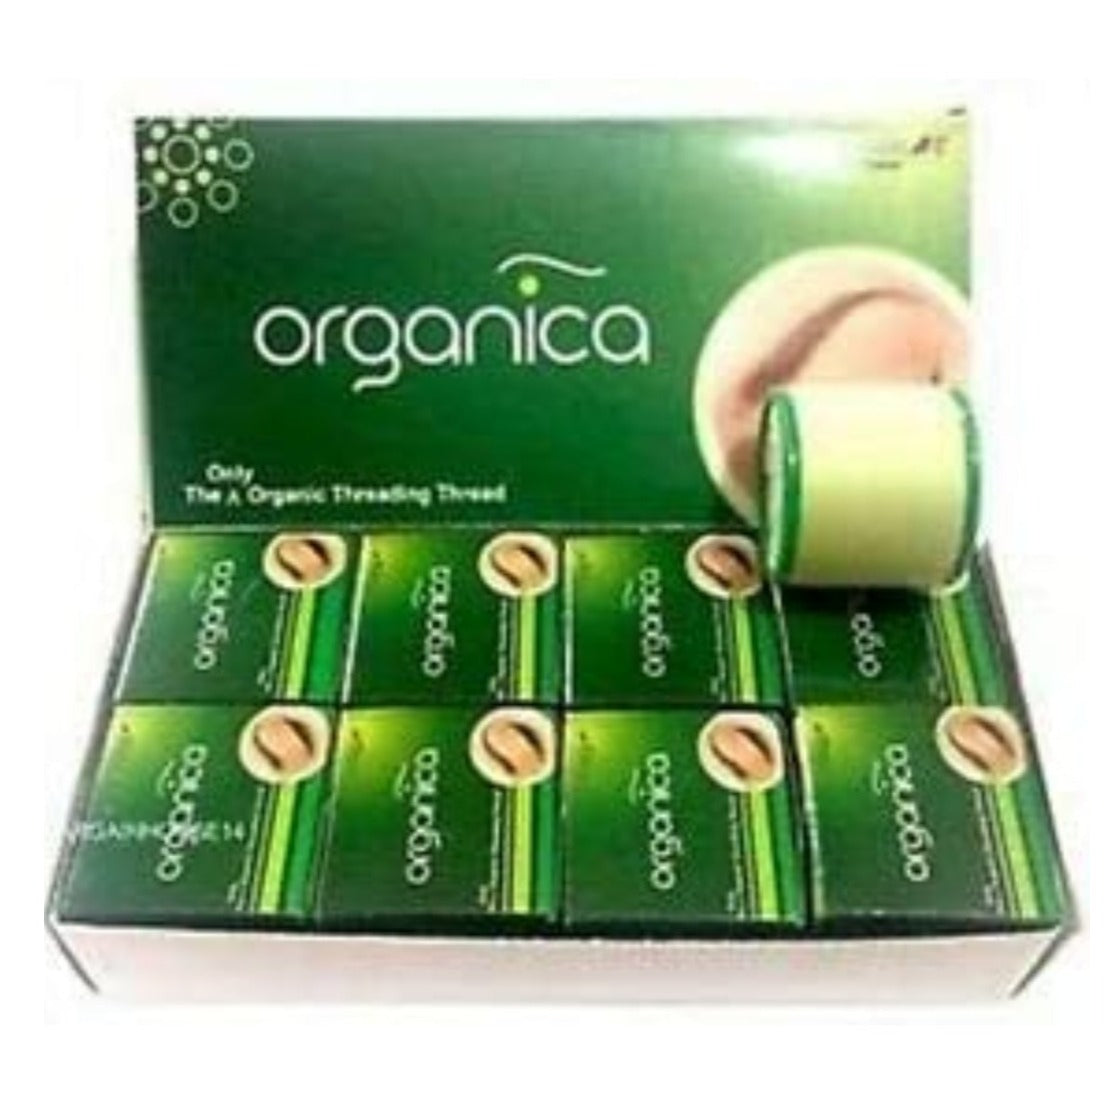 Organica Threading Thread - pack of 8